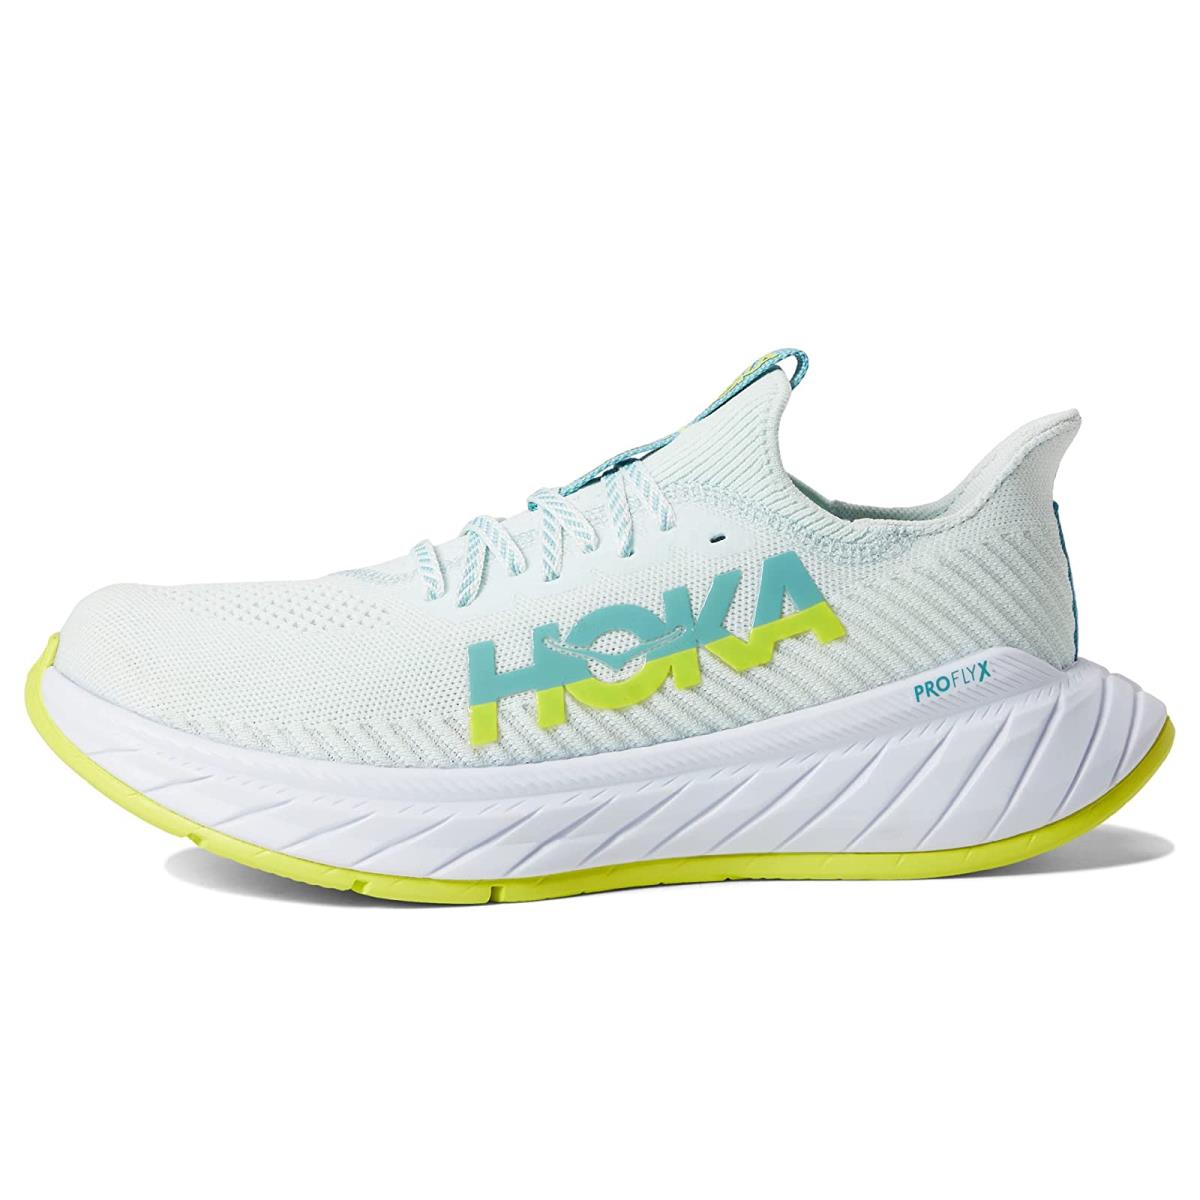 Hoka Carbon X 3 Men's Racing Running Shoe - Billowing Sail / Evening Primrose - Size 11